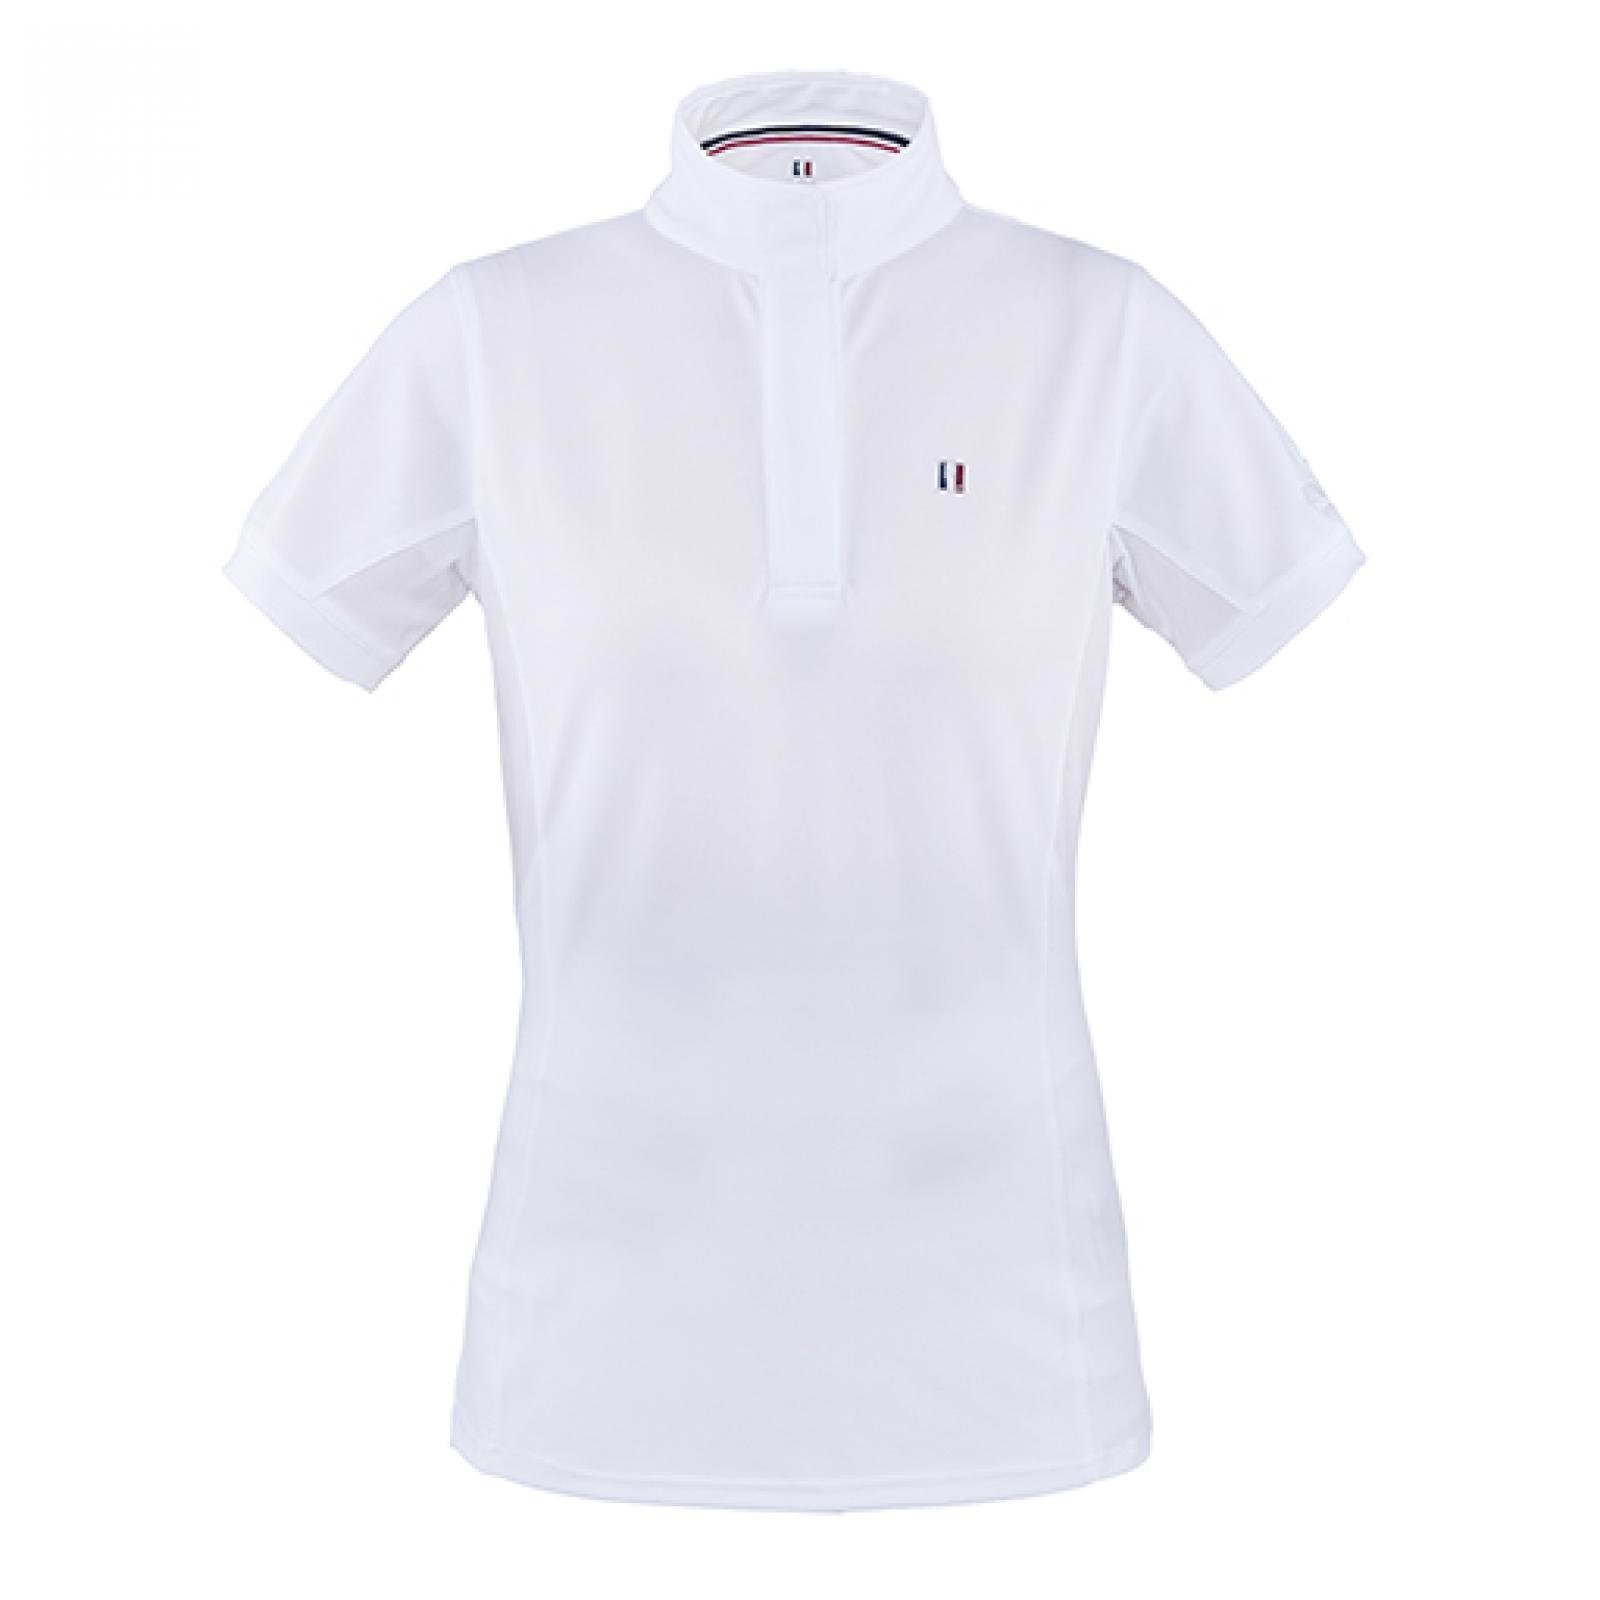 Kingsland Kingsland - Classic ladies short sleeve show shirt White